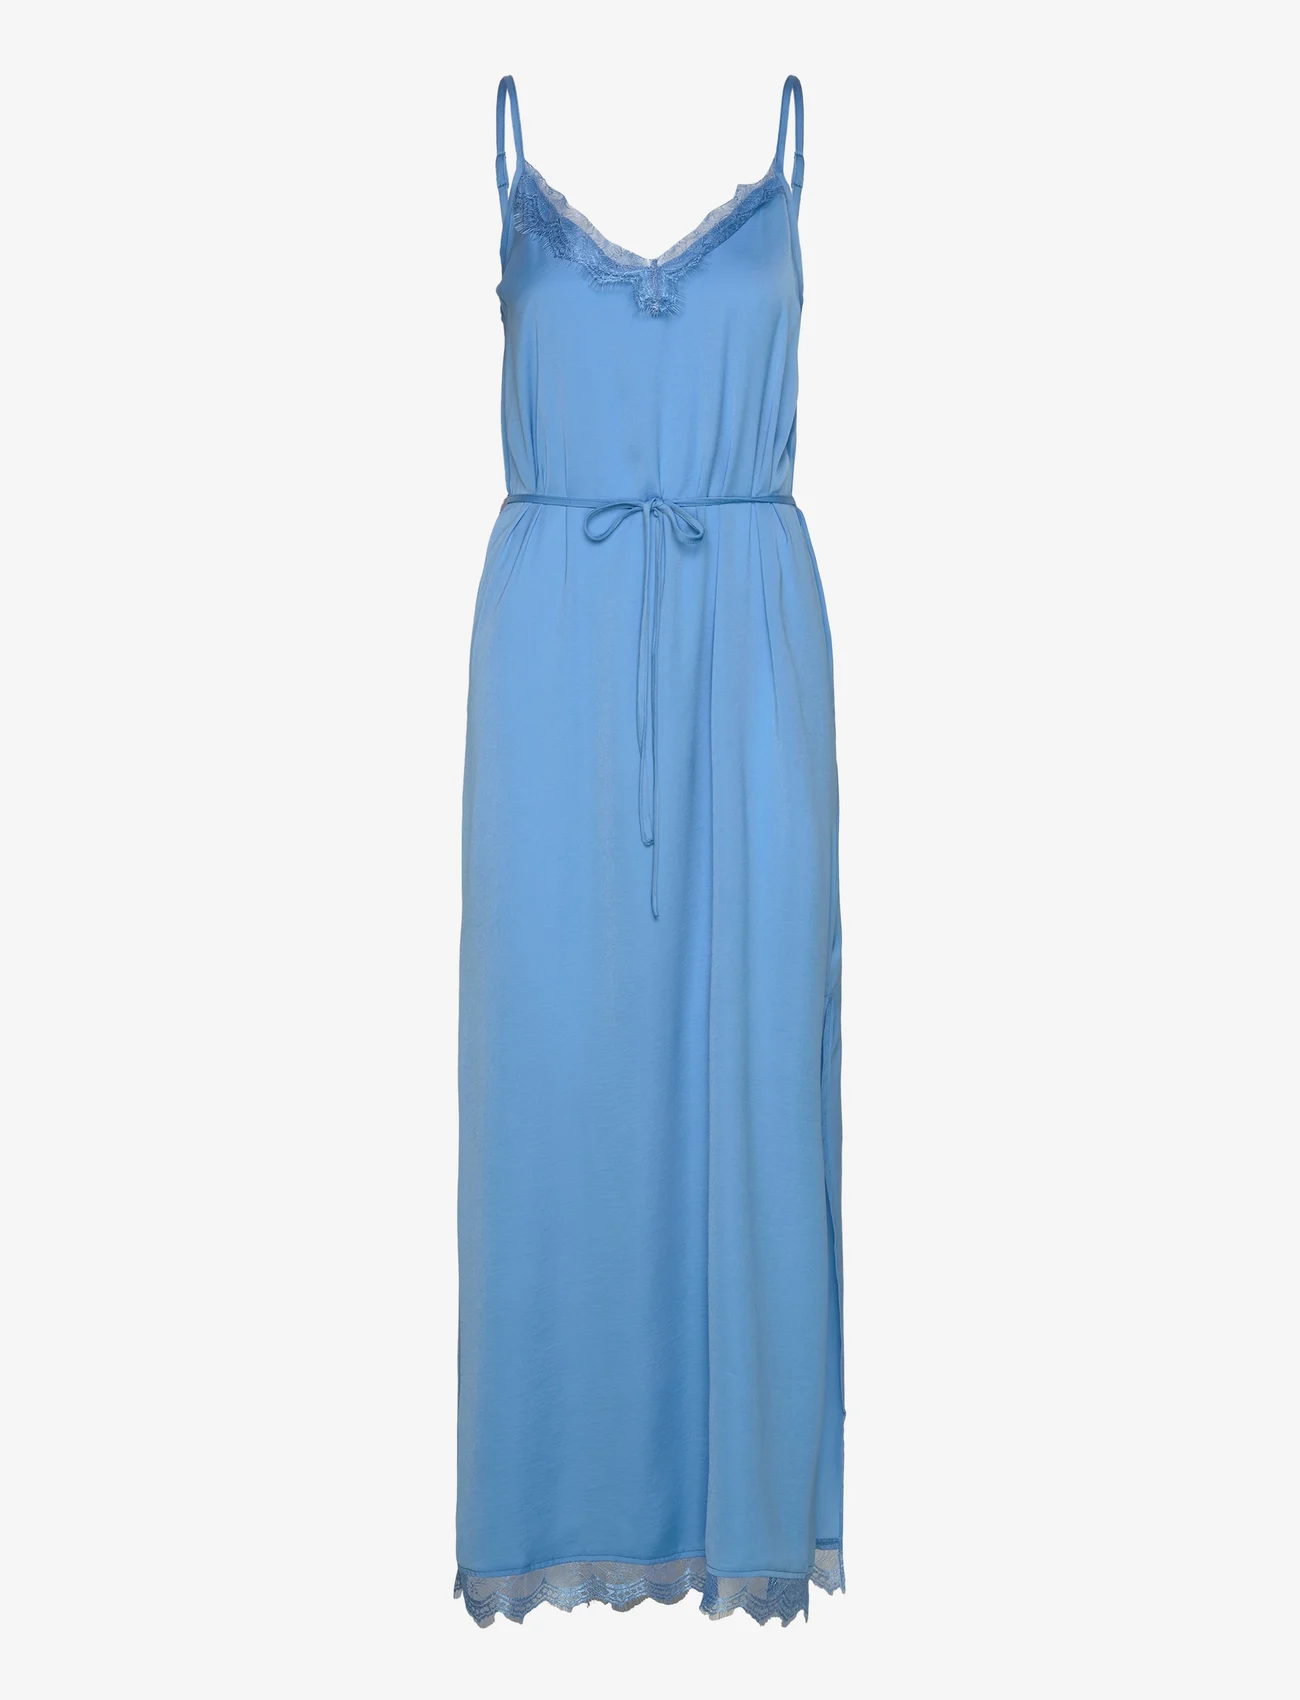 Saint Tropez - AshSZ Maxi Dress - schlupfkleider - azure blue - 0